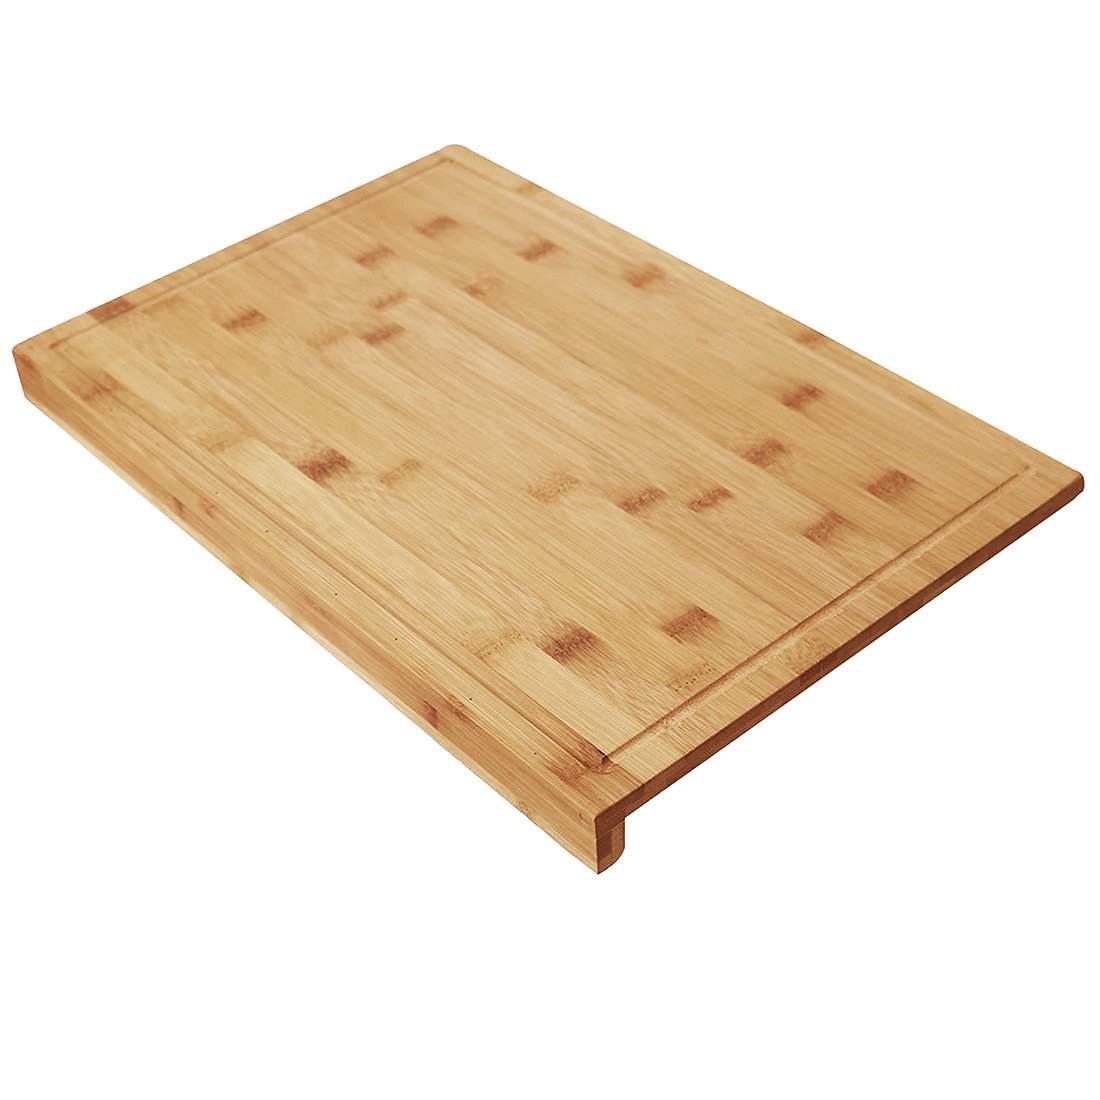 Comprar tabla cortar bambú. Accesorios cocina online